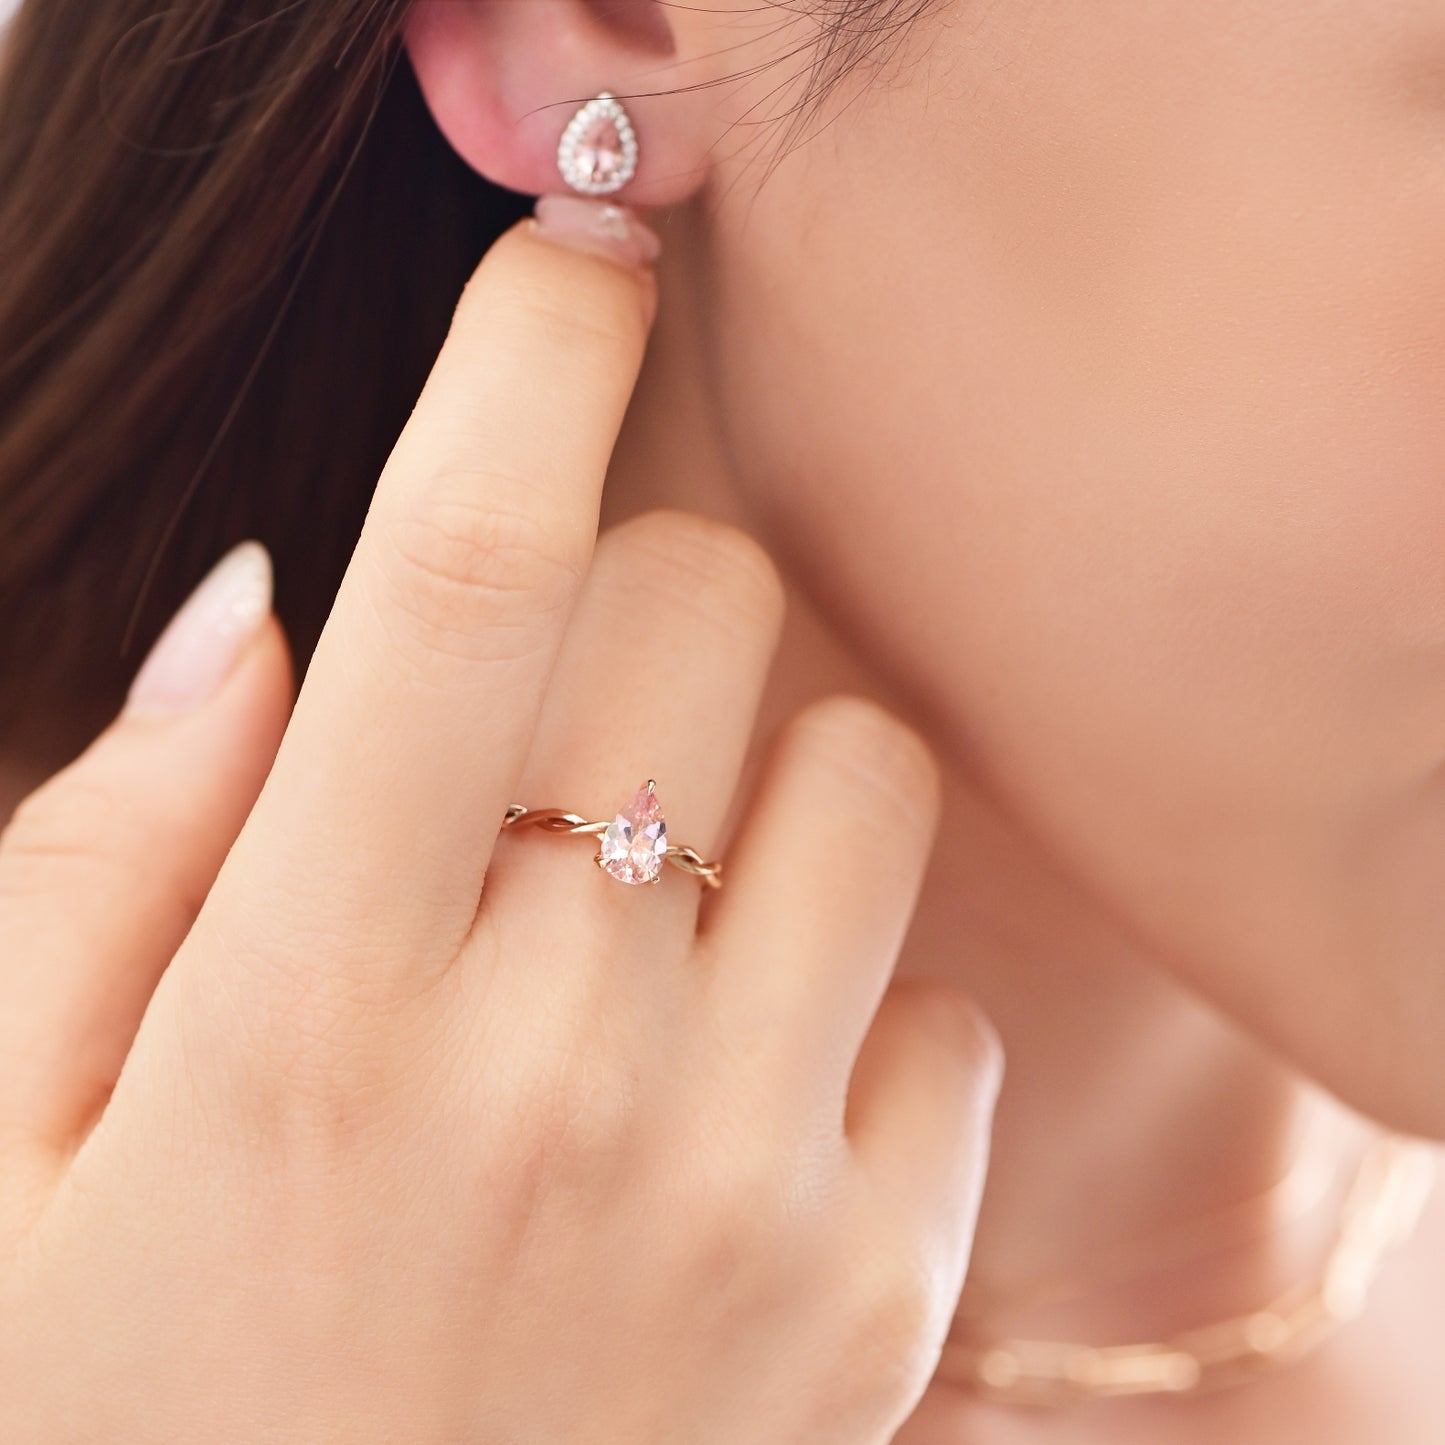 18k玫瑰金梨形粉紅摩根石鑽石戒指在中指上 18k Rose Gold Pear-shaped Morganite Diamond Ring on middle finger